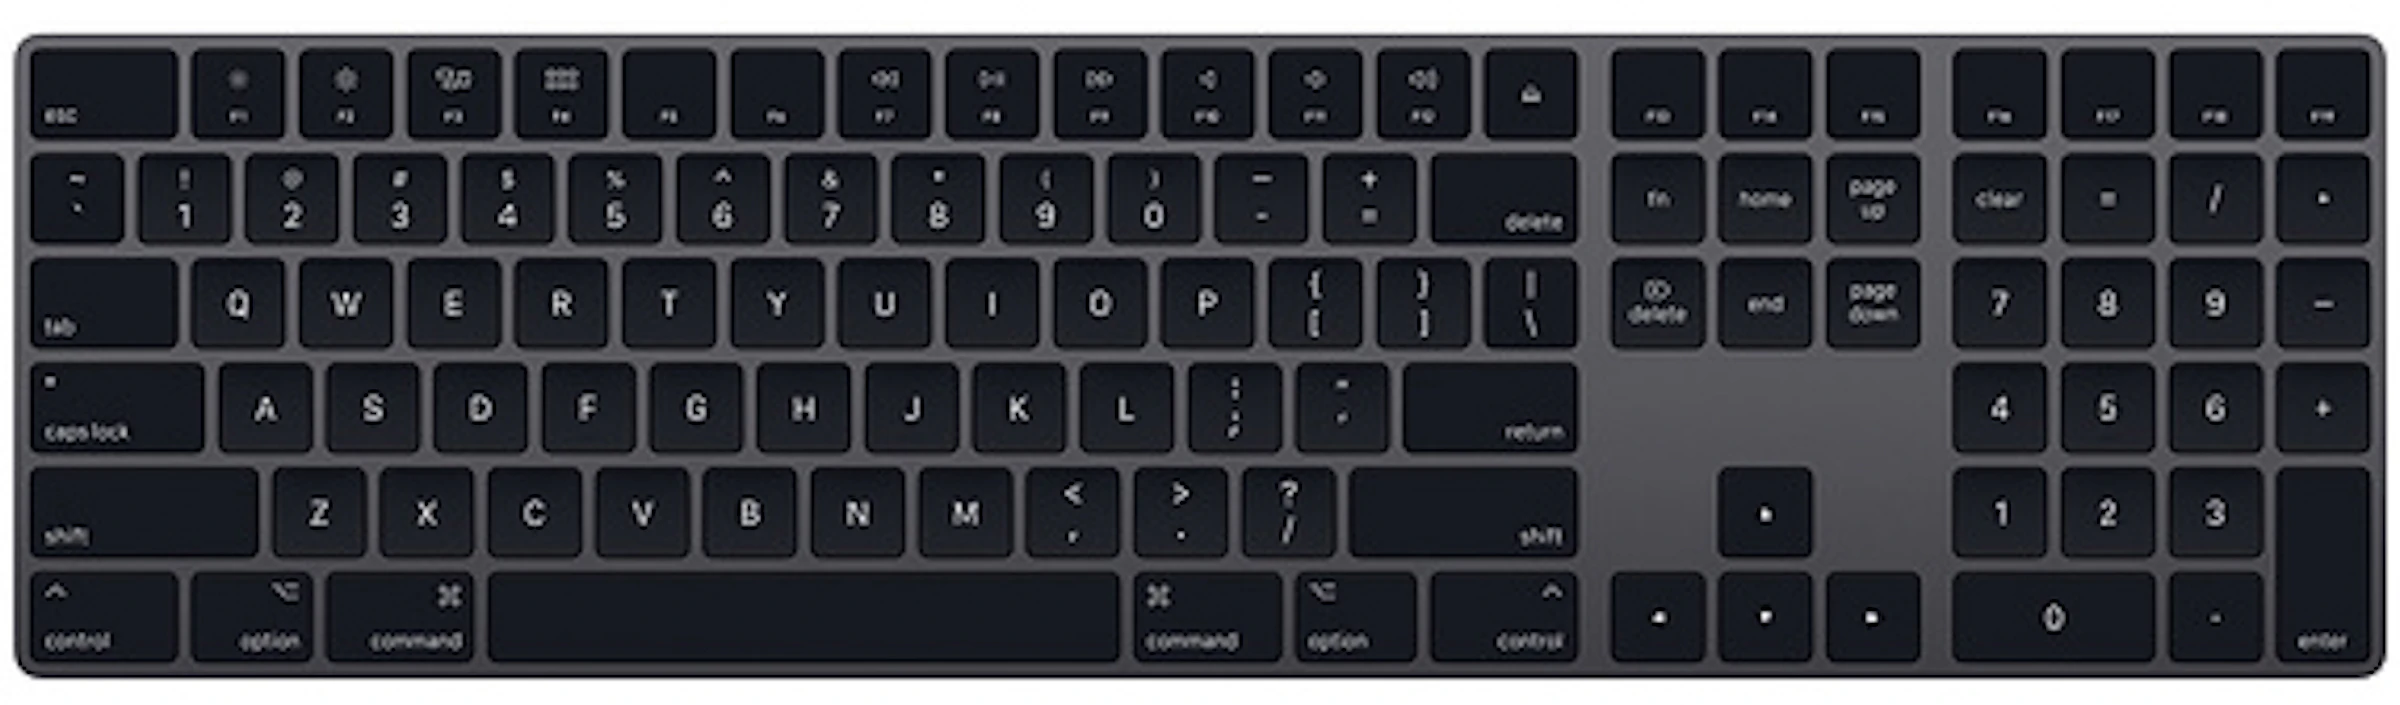 definitief methaan Verbinding Apple Magic Keyboard with Numeric Keypad US English Space Gray (MRMH2LL/A)  - US